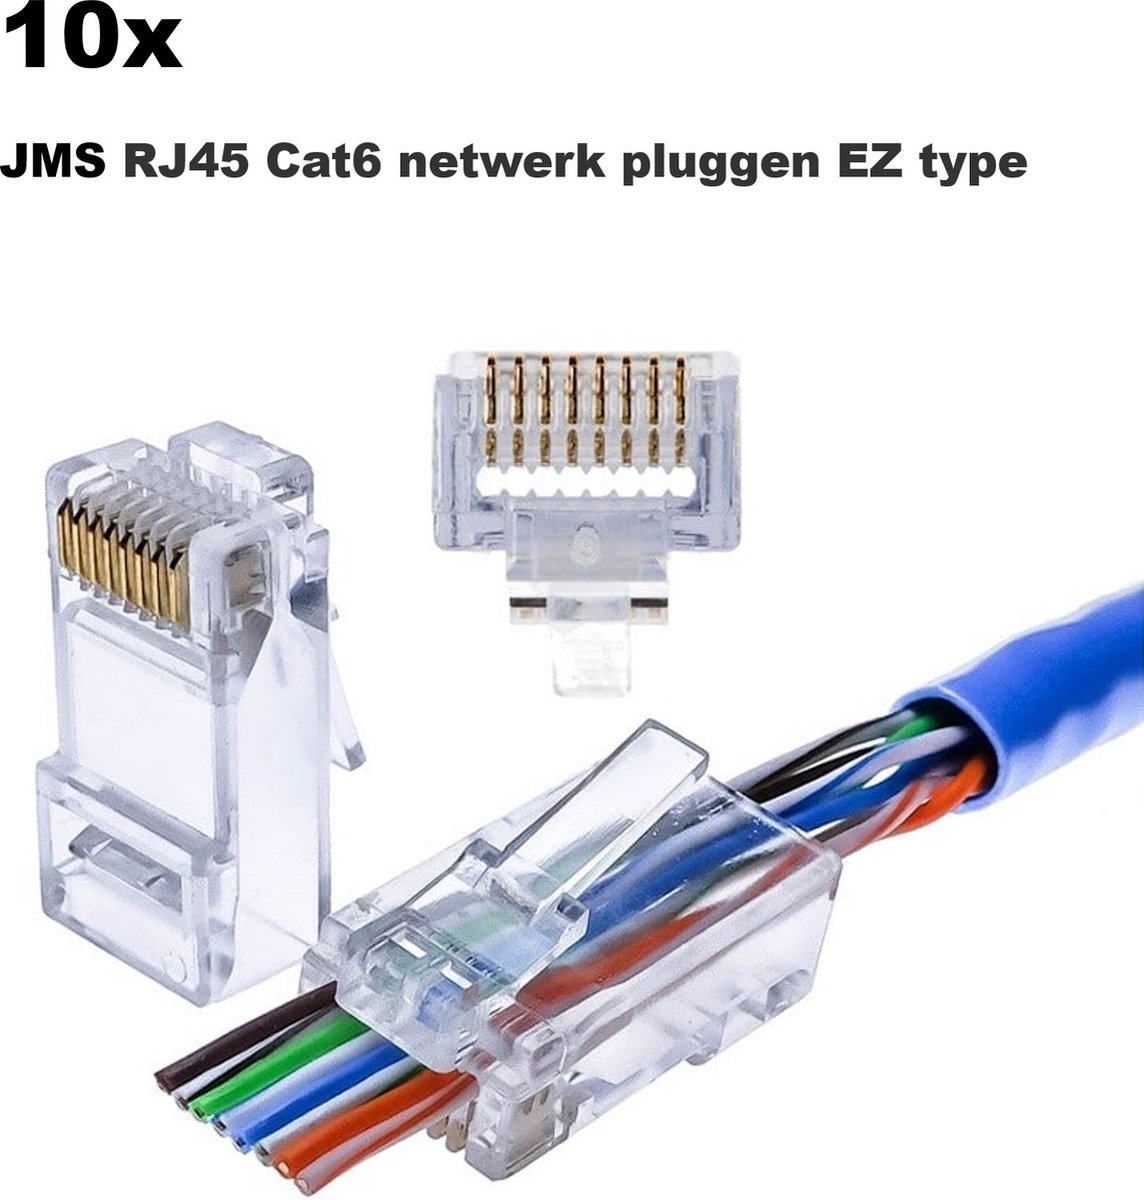 Connecteurs RJ45, connecteurs SHD RJ45, connecteur Cat6, connecteur Cat5e,  connecteurs de câble Ethernet à sertir-200 pièces